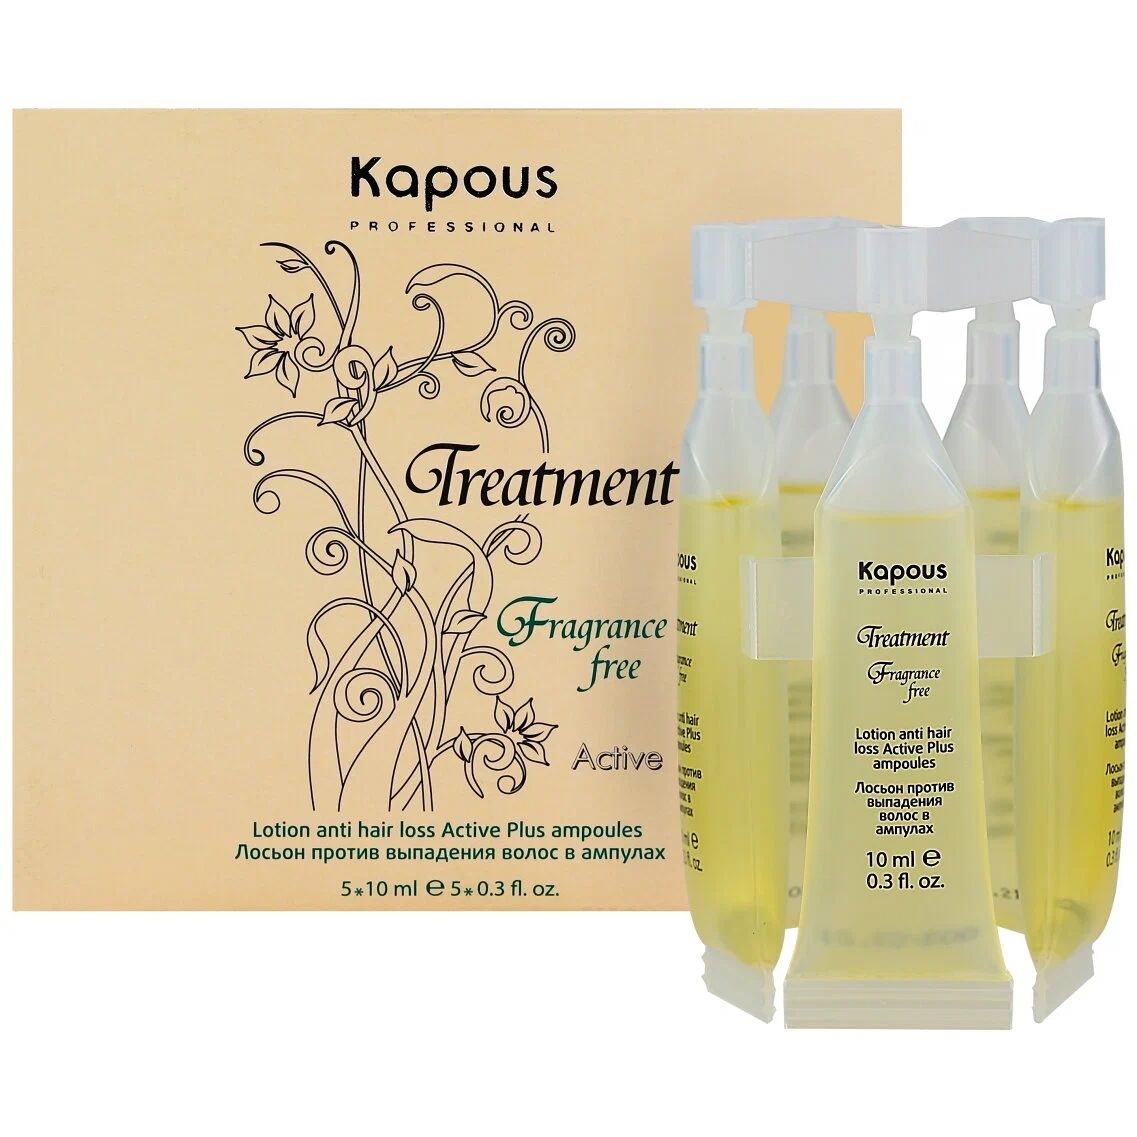 Лосьон для волос Kapous Professional Treatment Fragrance free в ампулах 5х10 мл